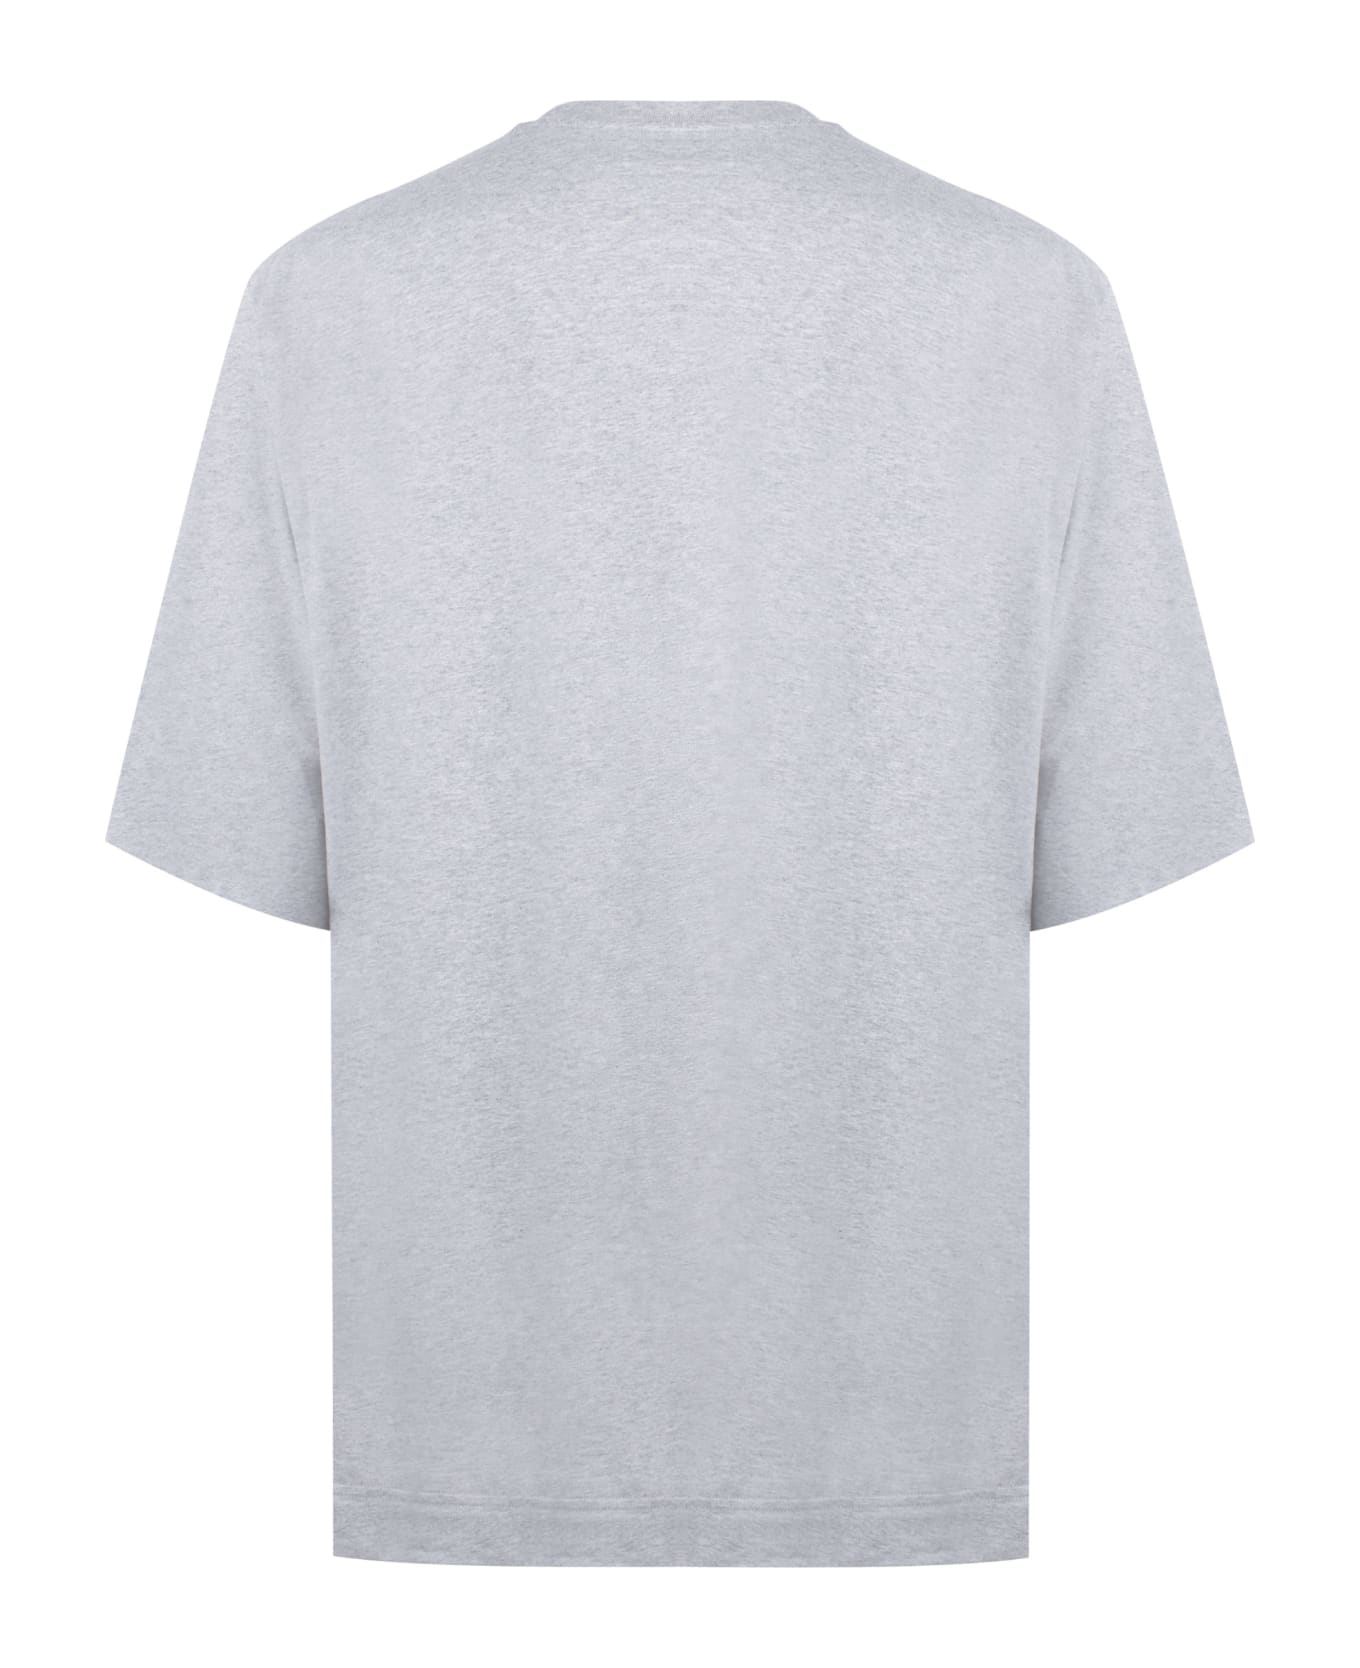 Givenchy Cotton Crew-neck T-shirt - grey シャツ